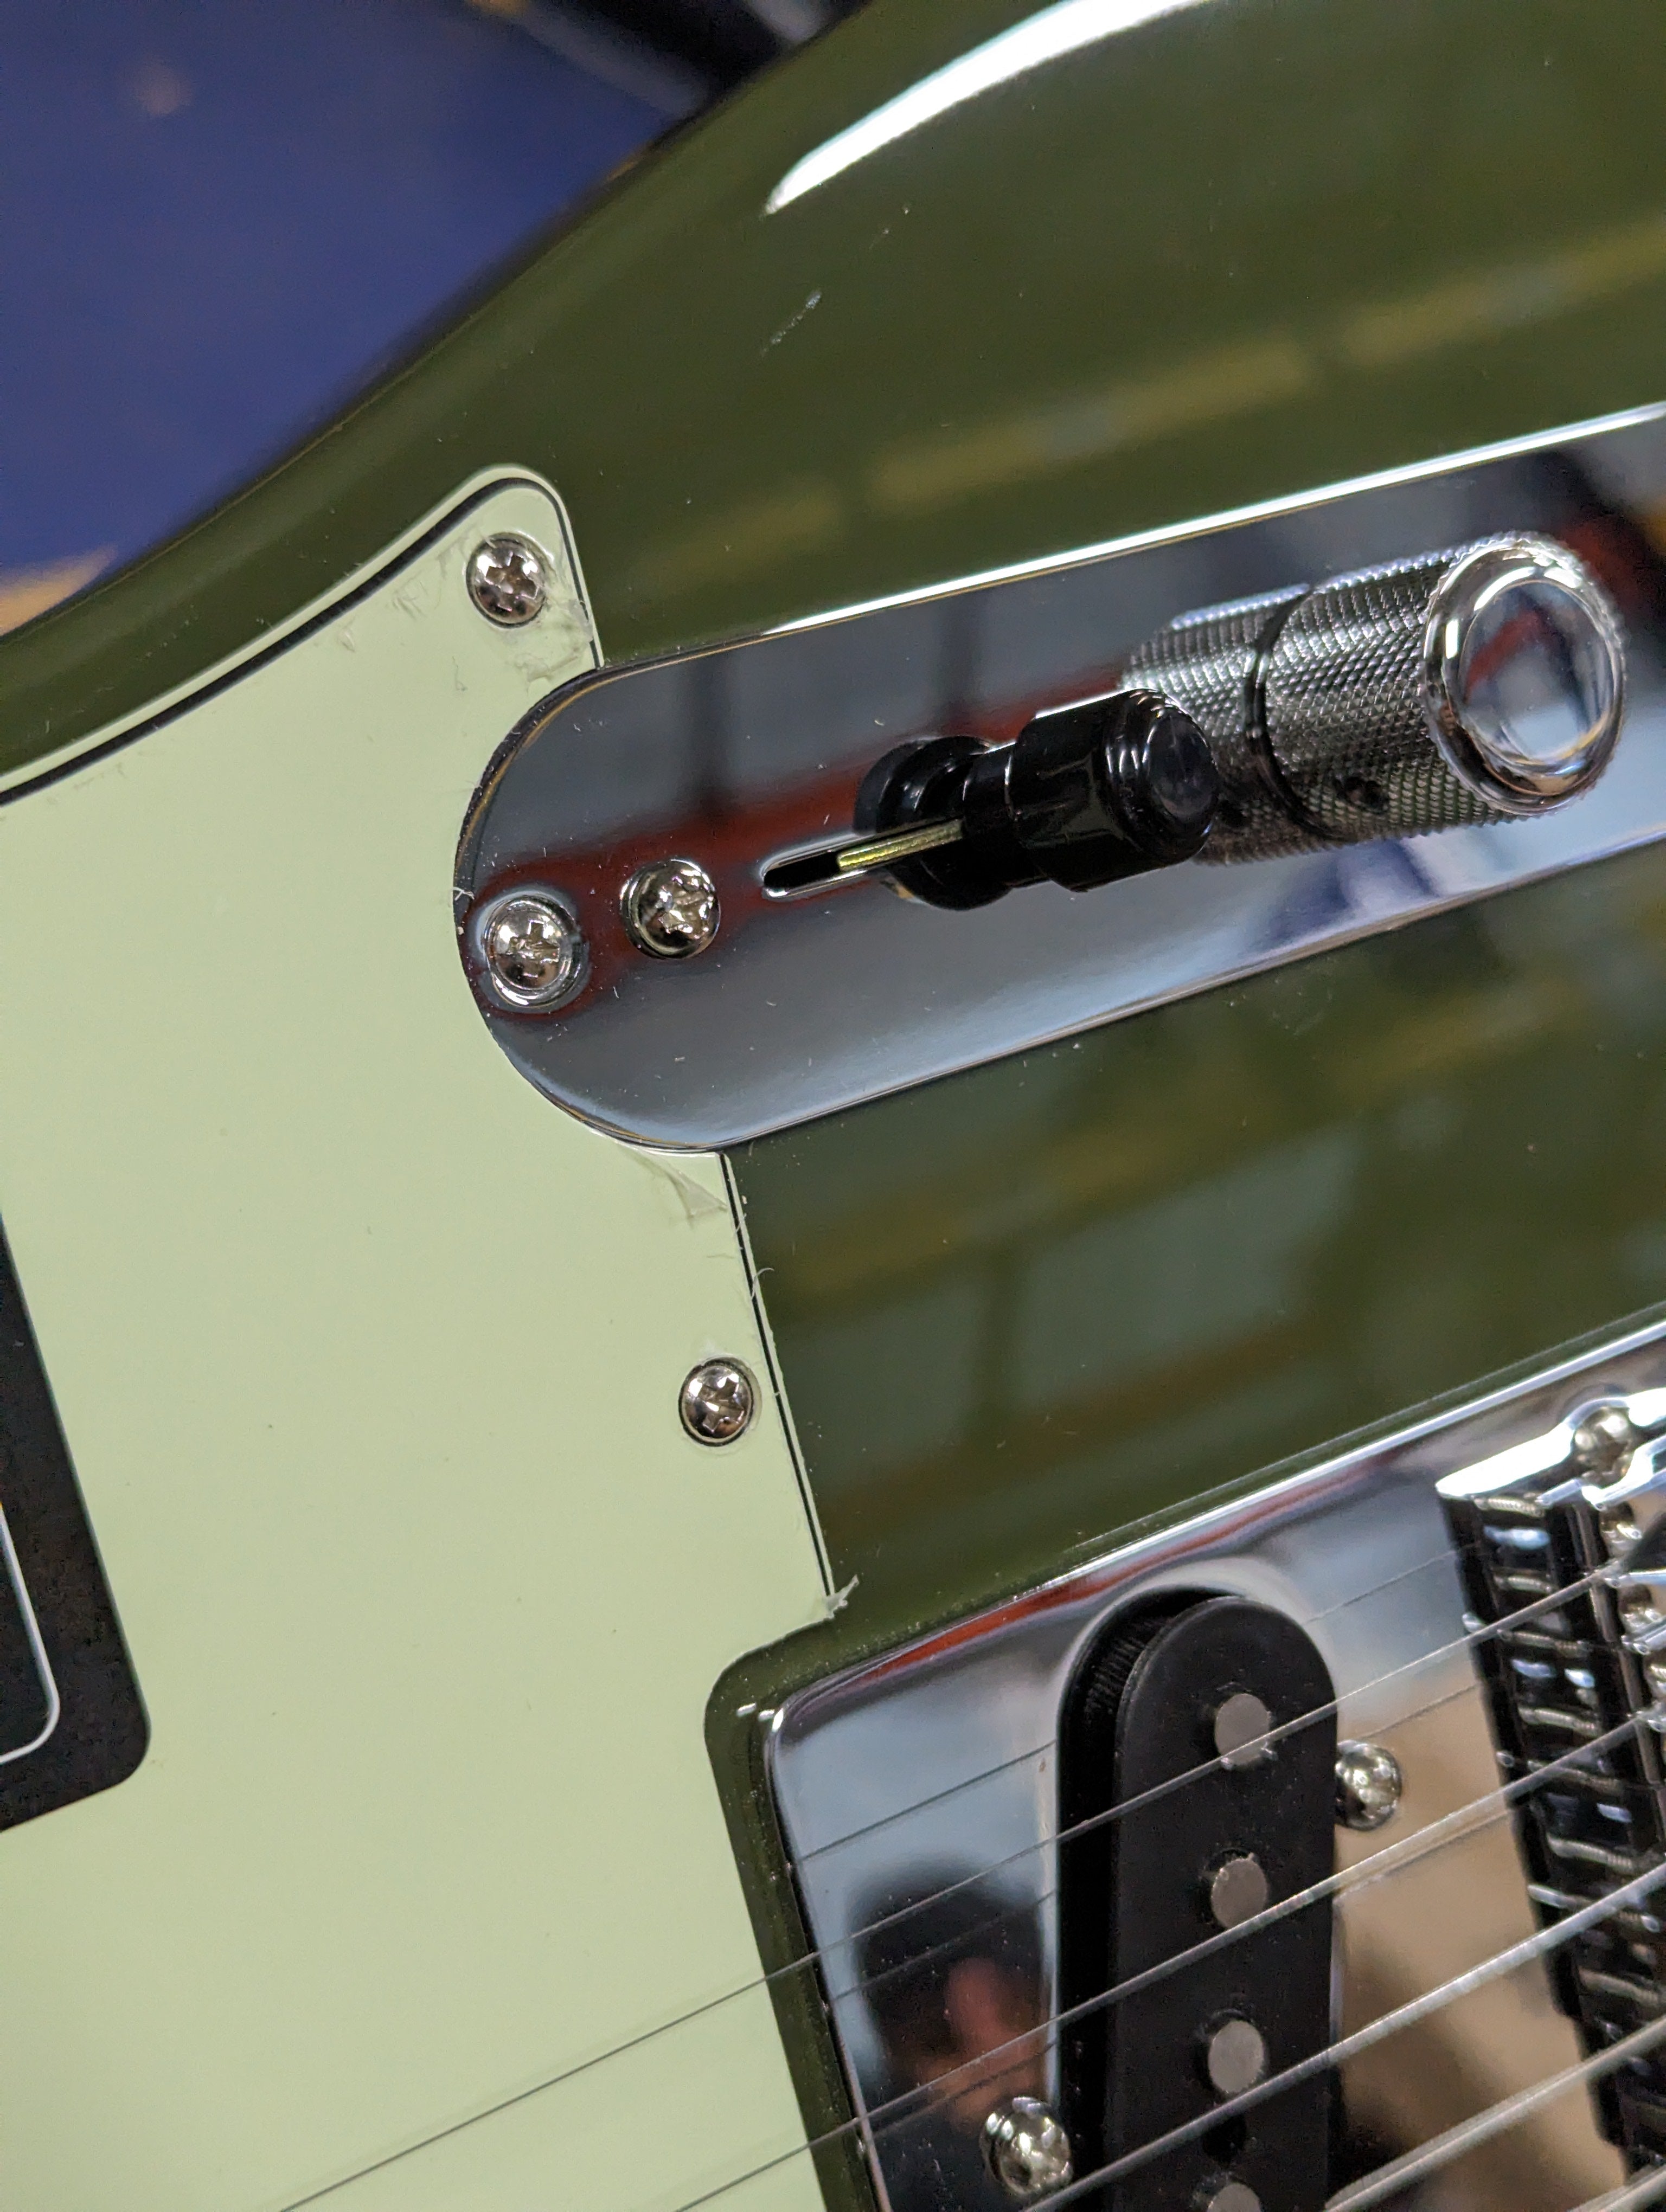 Fender Player Telecaster Olive w/3-Ply Mint Pickguard